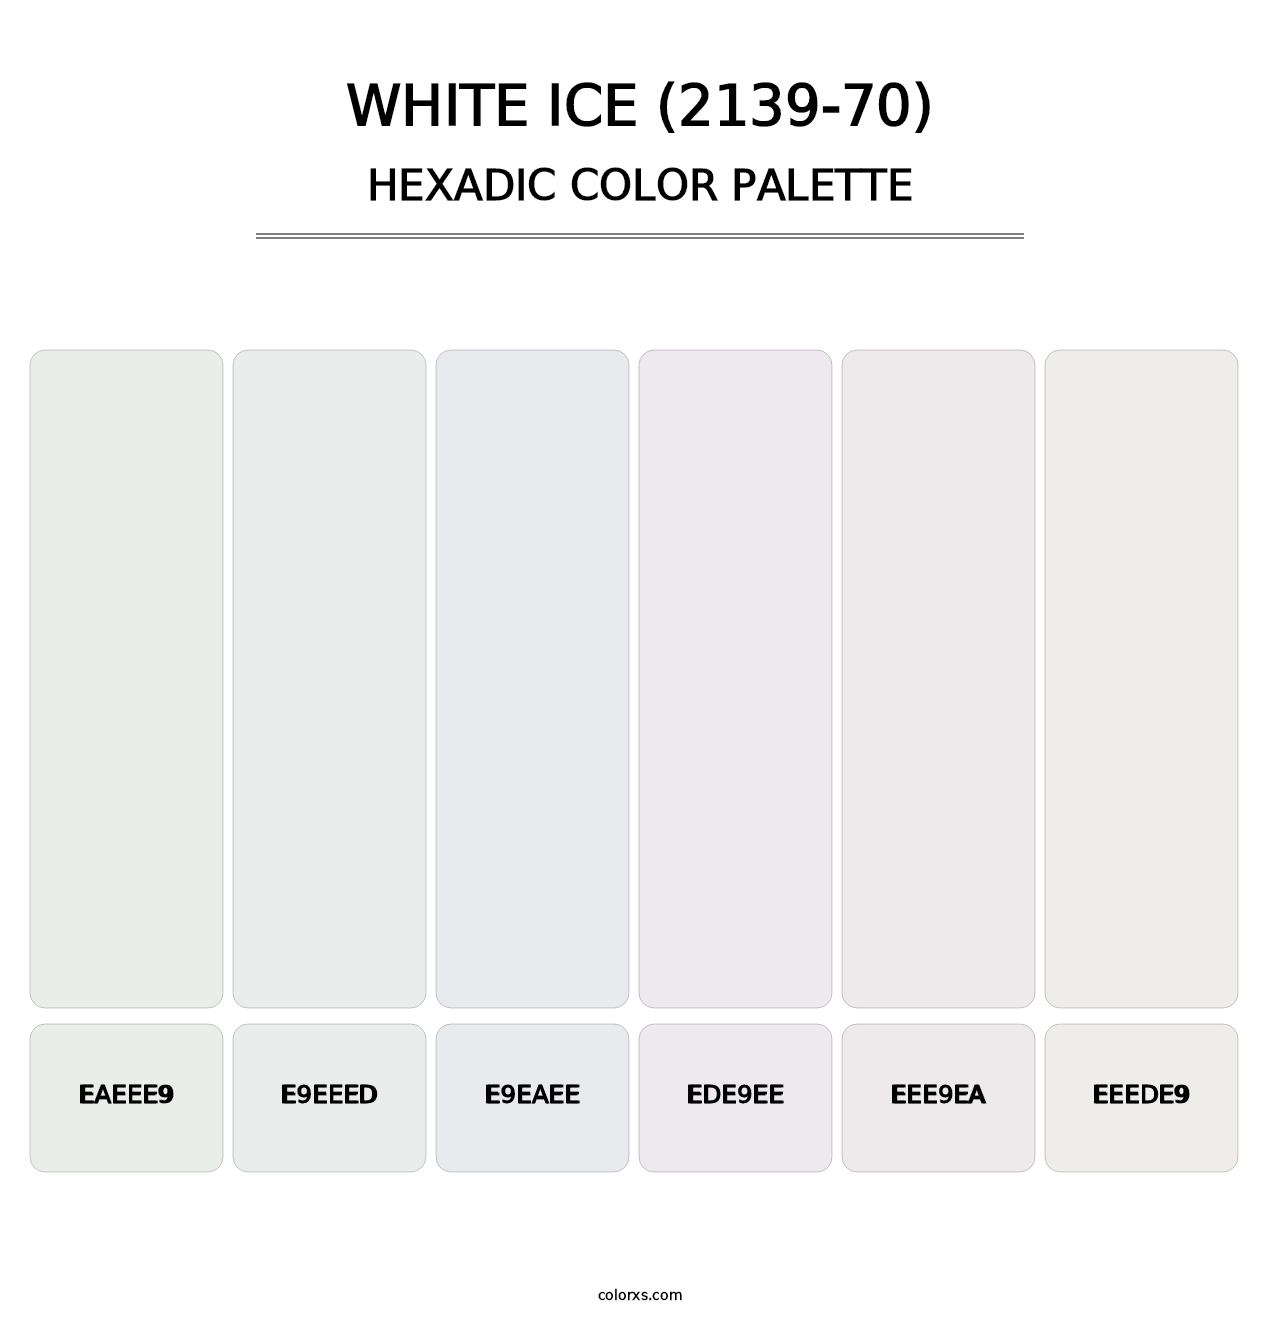 White Ice (2139-70) - Hexadic Color Palette